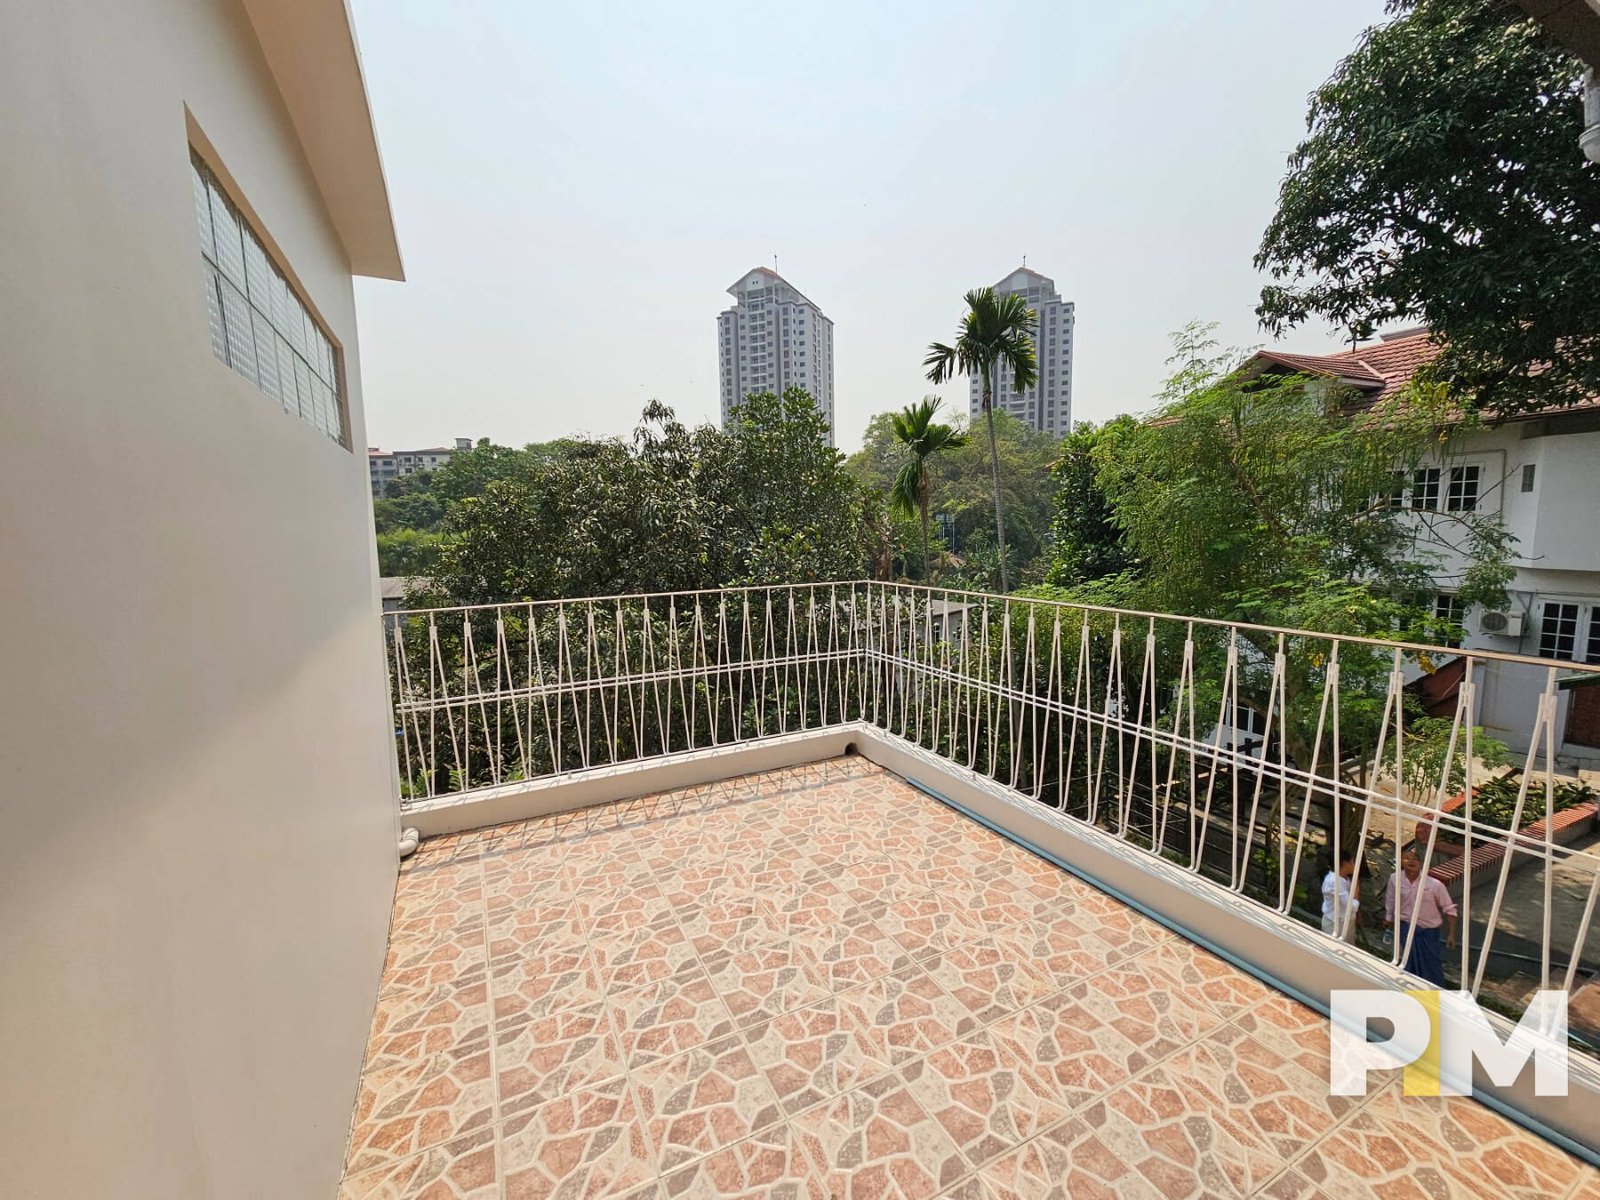 Balcony view - Property in Myanmar